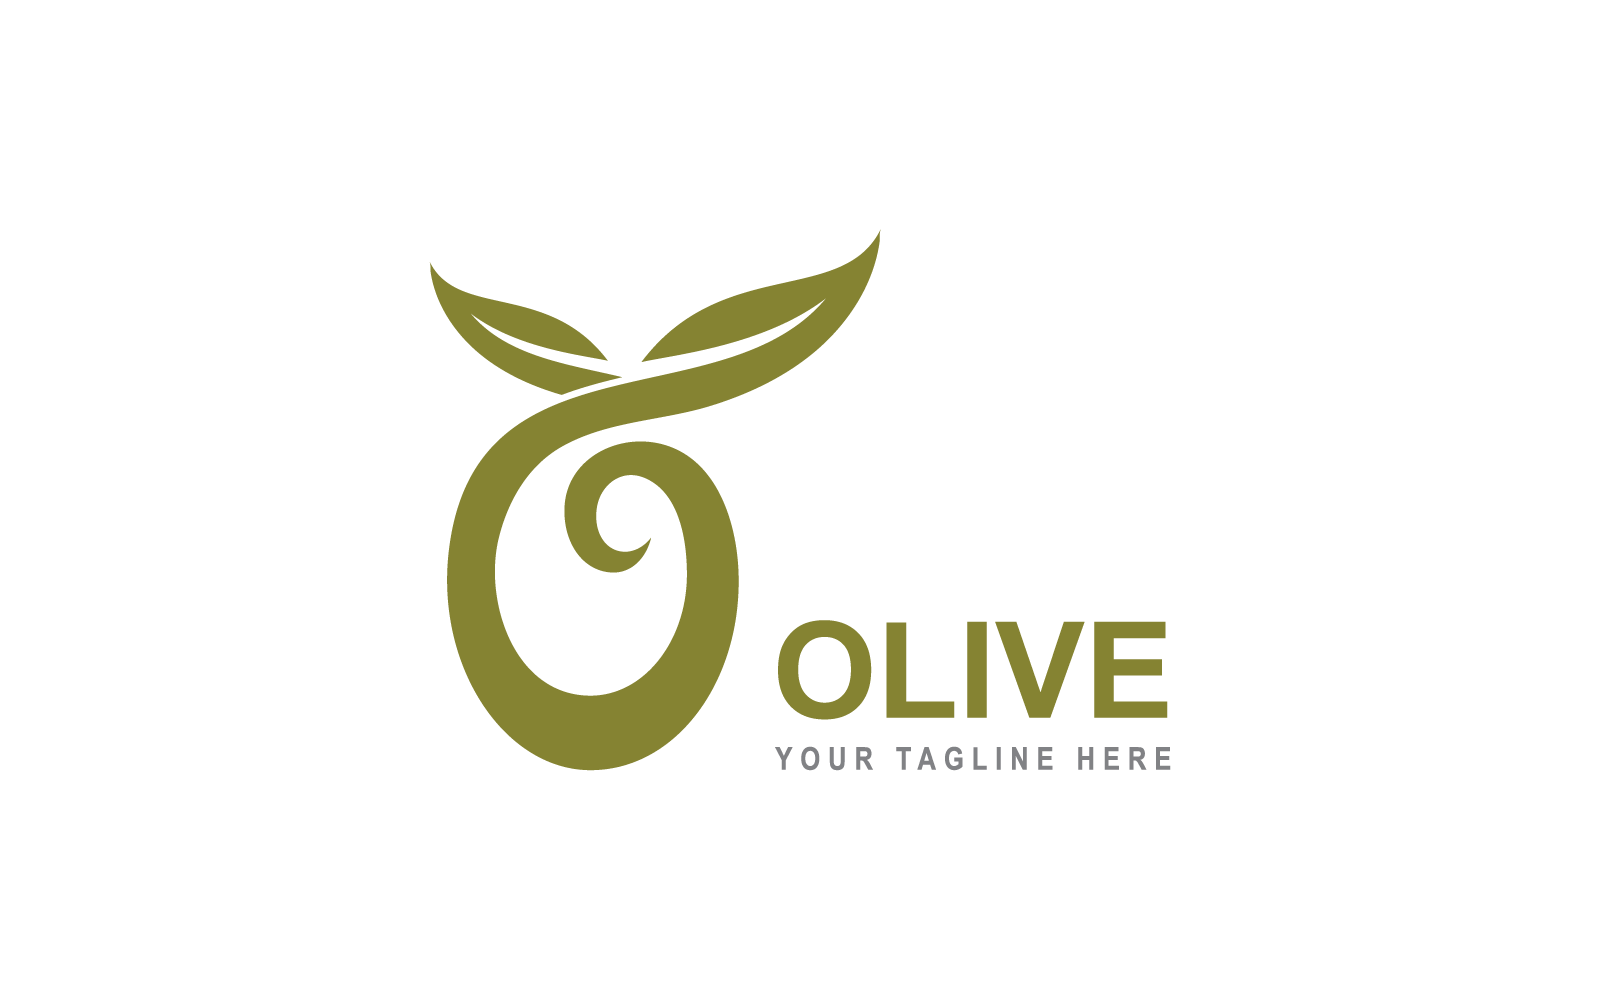 Olive-Logo-Vorlage, Illustrationsvektor, flaches Design